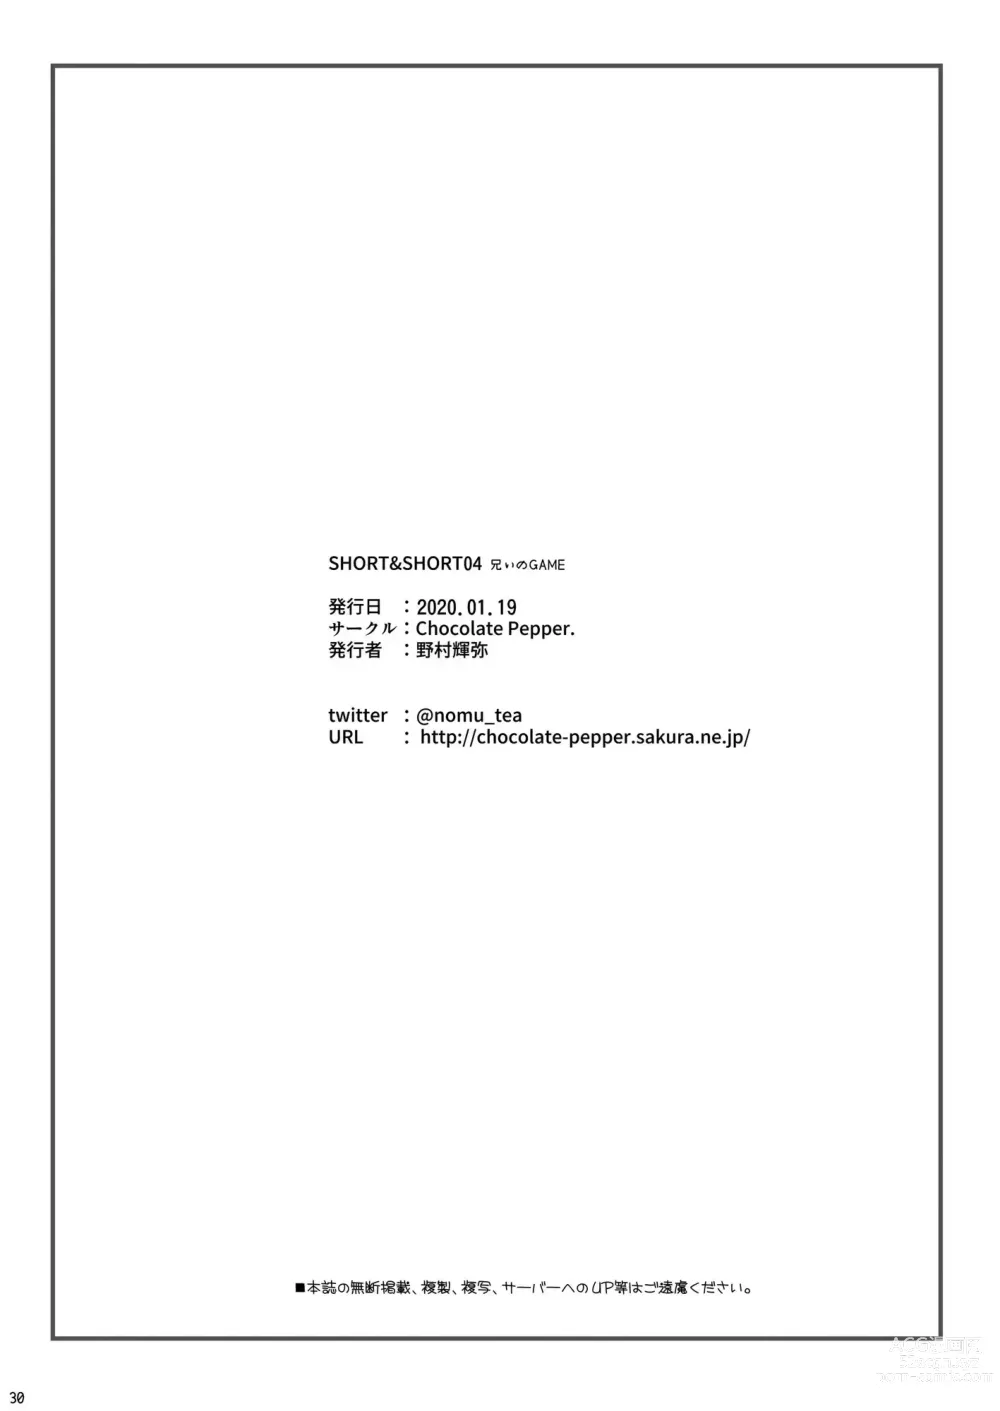 Page 29 of doujinshi SHORT&SHORT 04 Nii no GAME